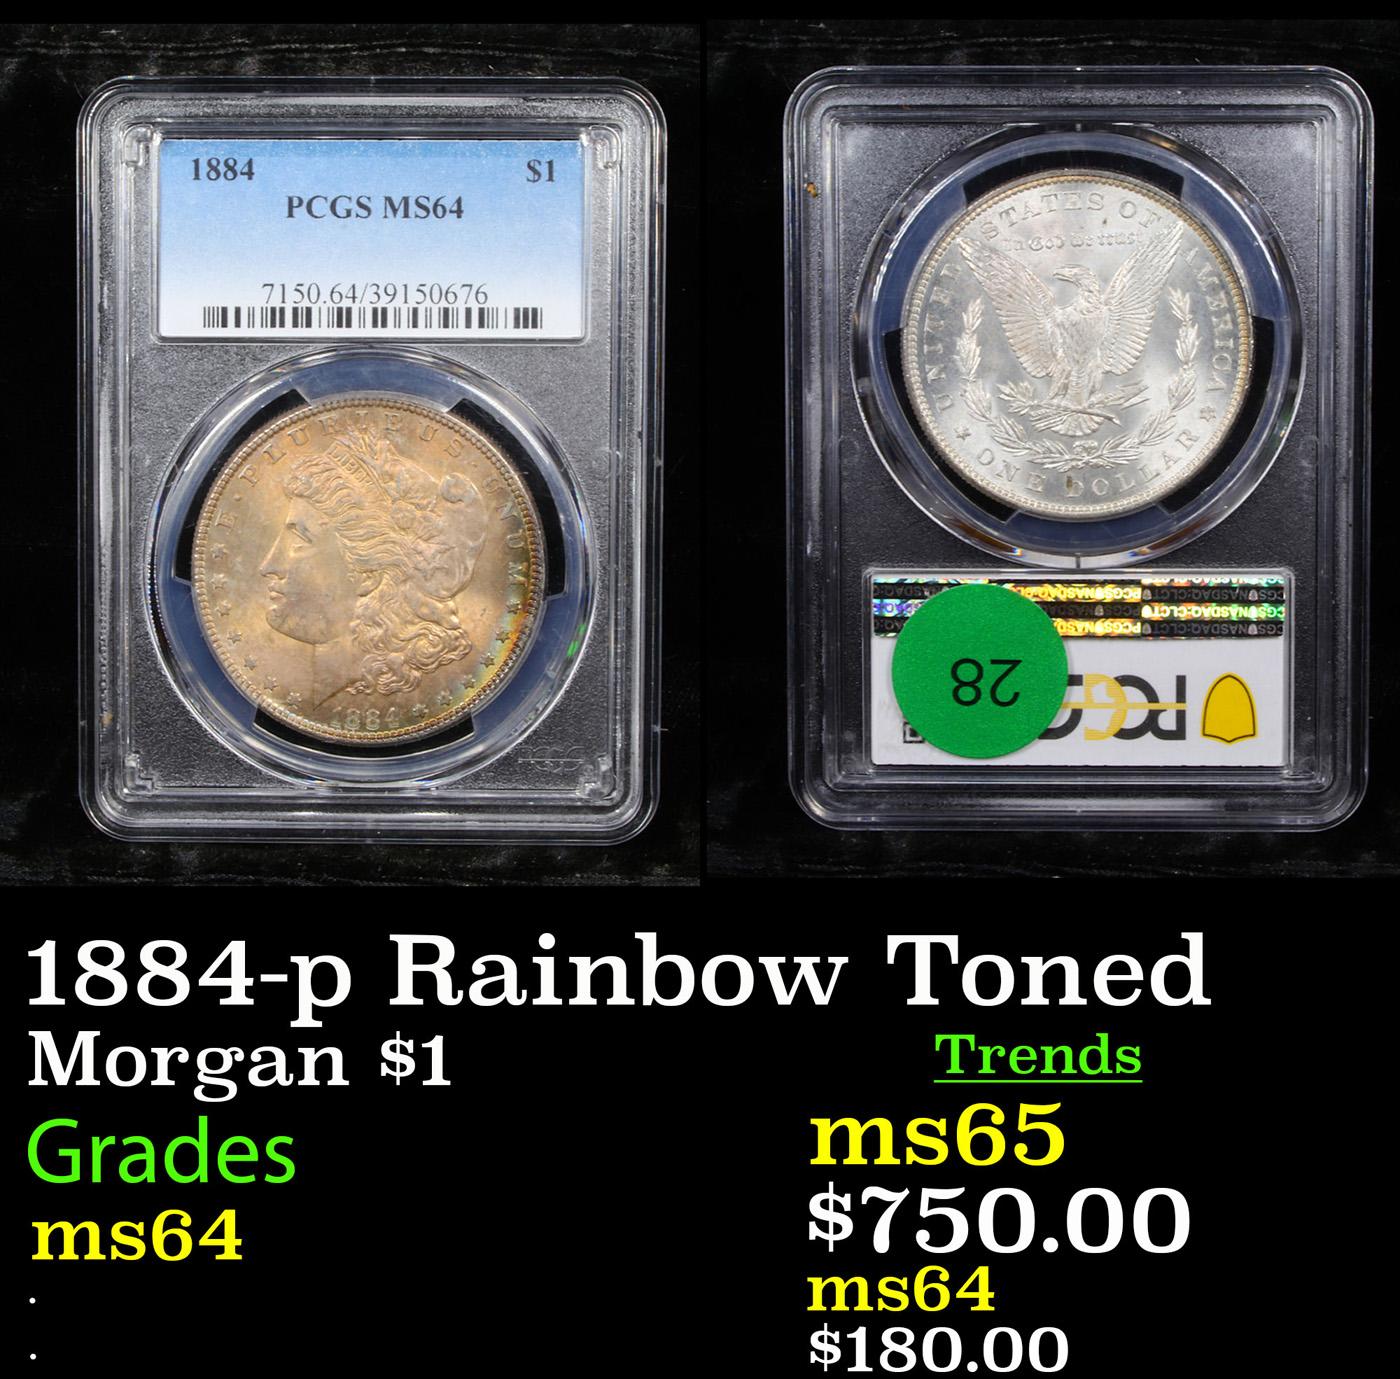 PCGS 1884-p Rainbow Toned Morgan Dollar $1 Graded ms64 By PCGS